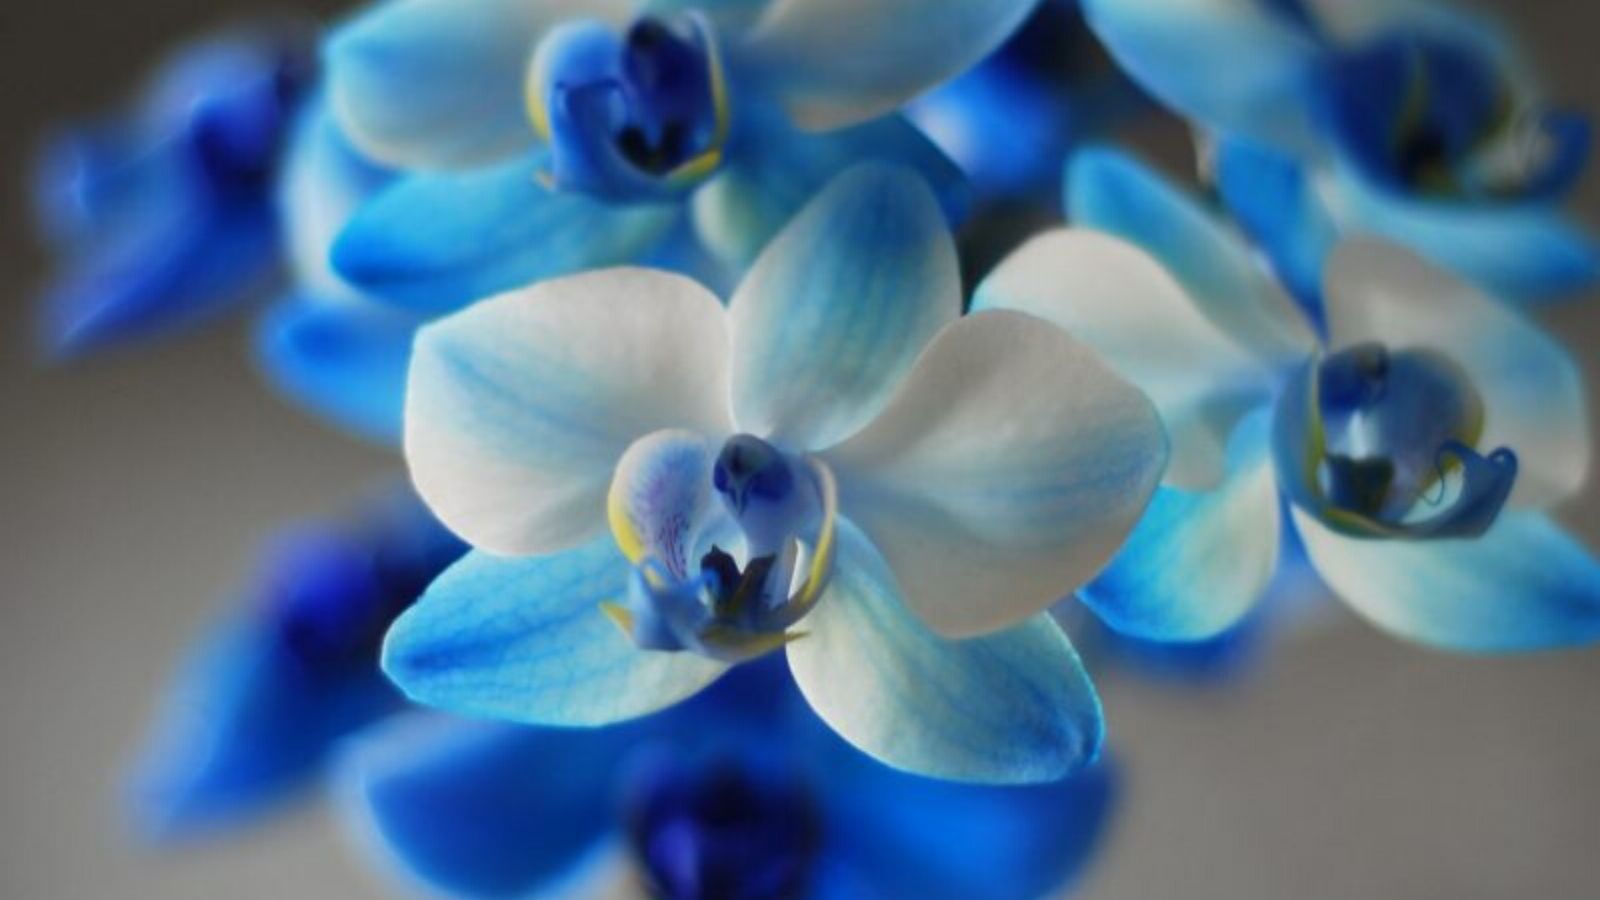 Phalaenopsis Royal Blue - Product on Thursd